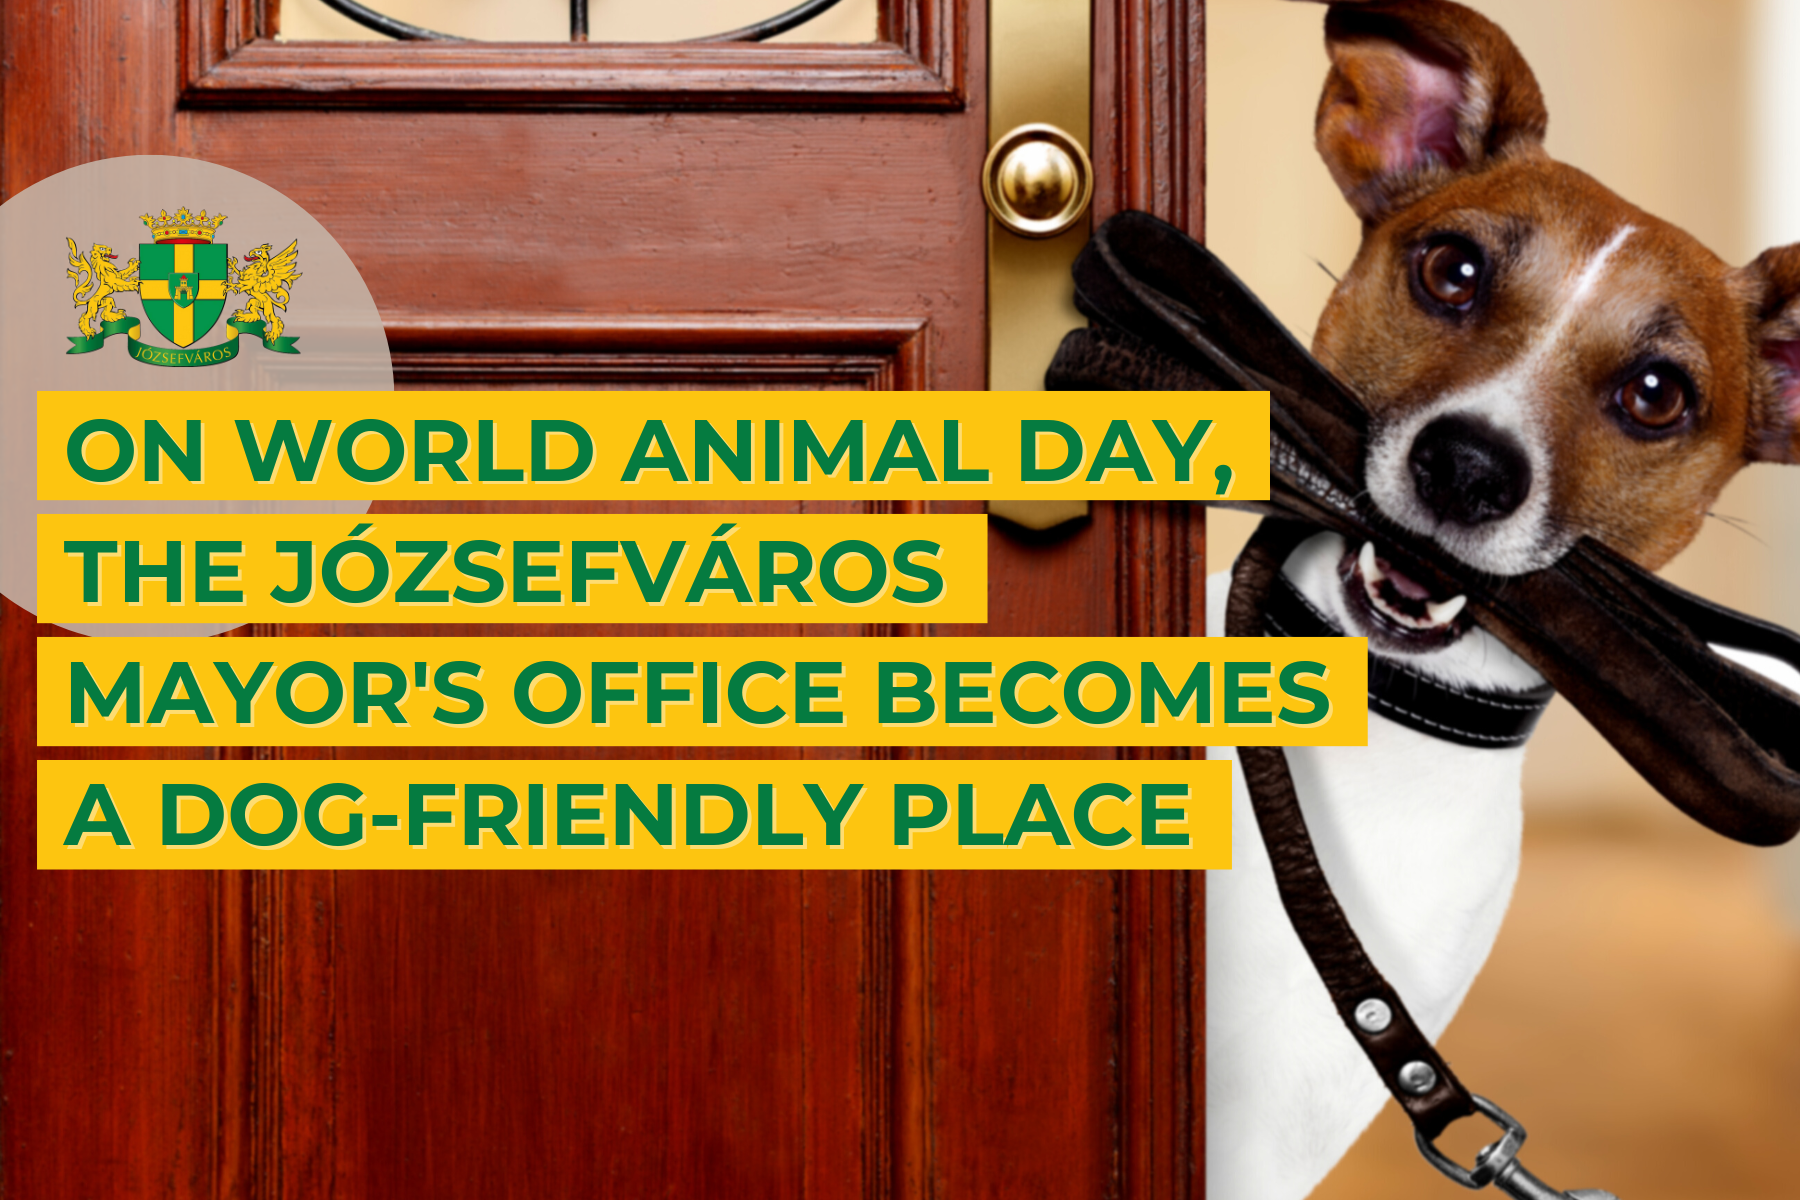 On World Animal Day, the Józsefváros Mayor's Office becomes a dog-friendly place